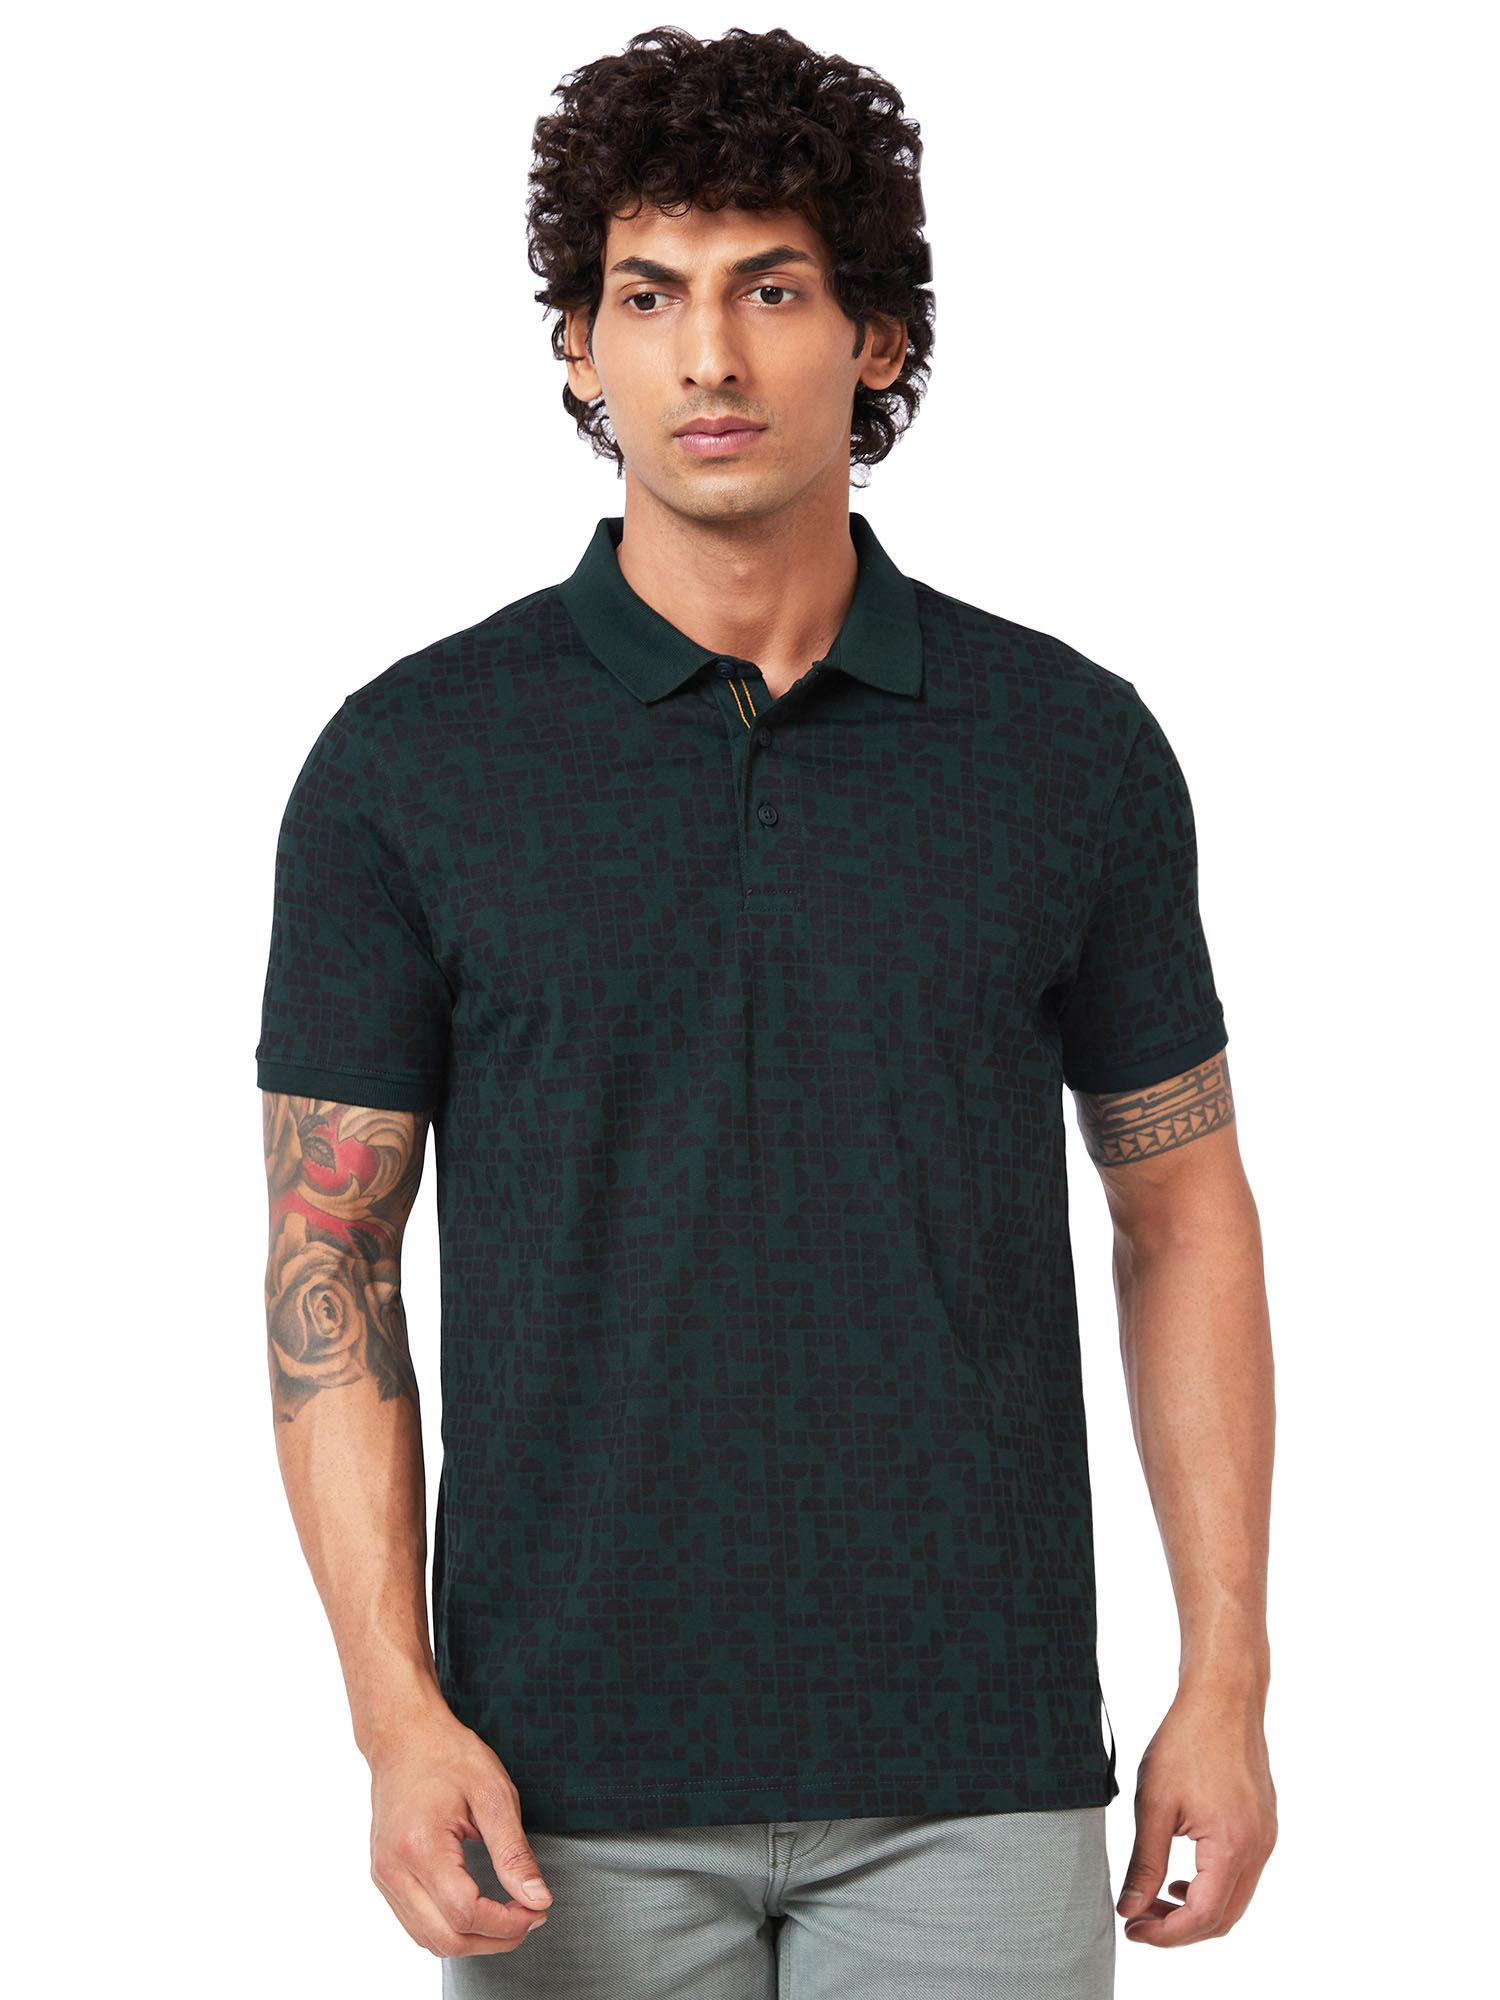 polo collar half sleeves green printed t-shirt for men